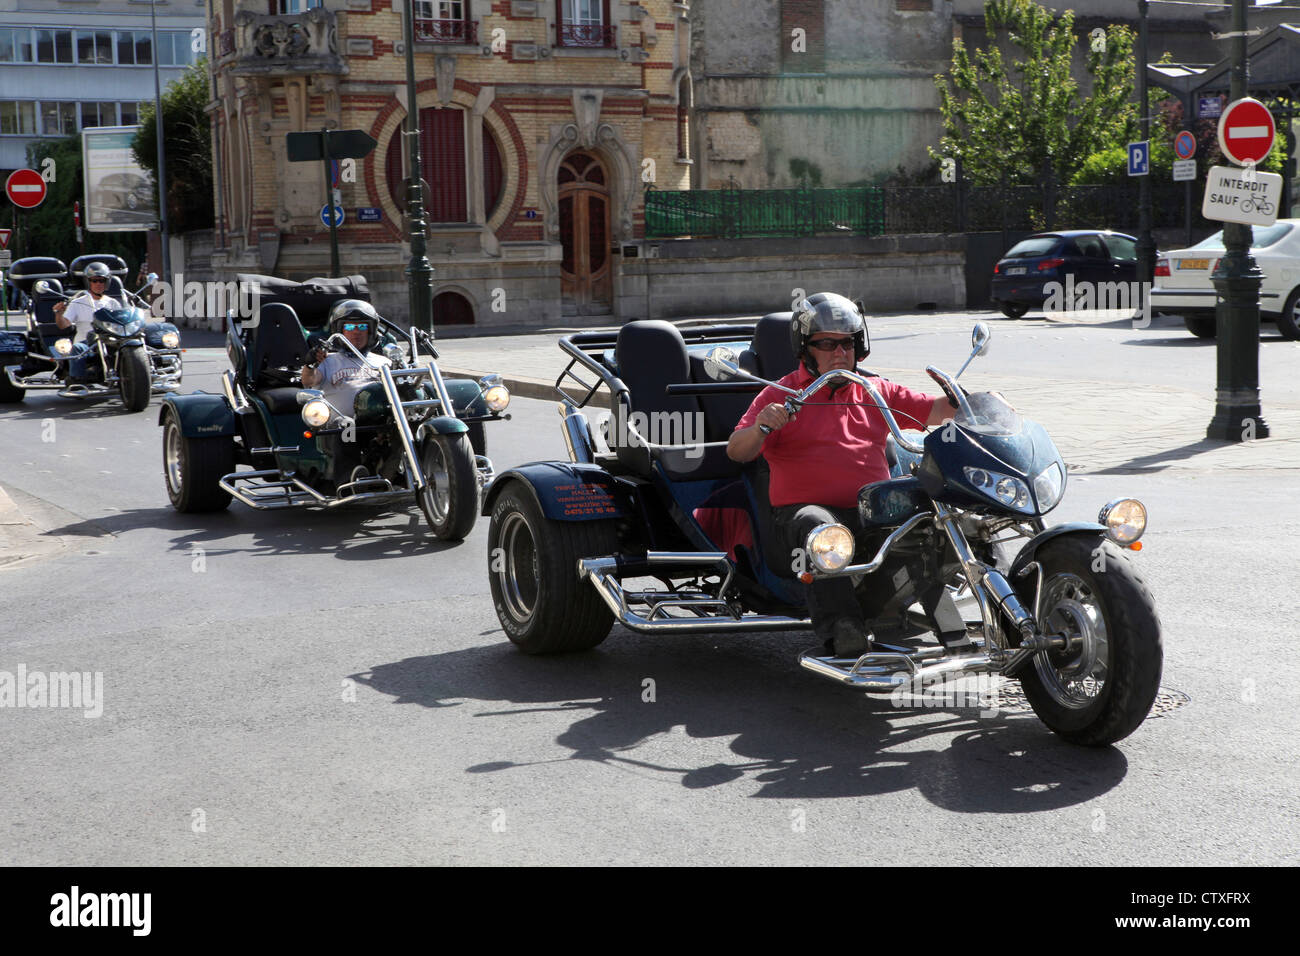 Les motards en France Banque D'Images